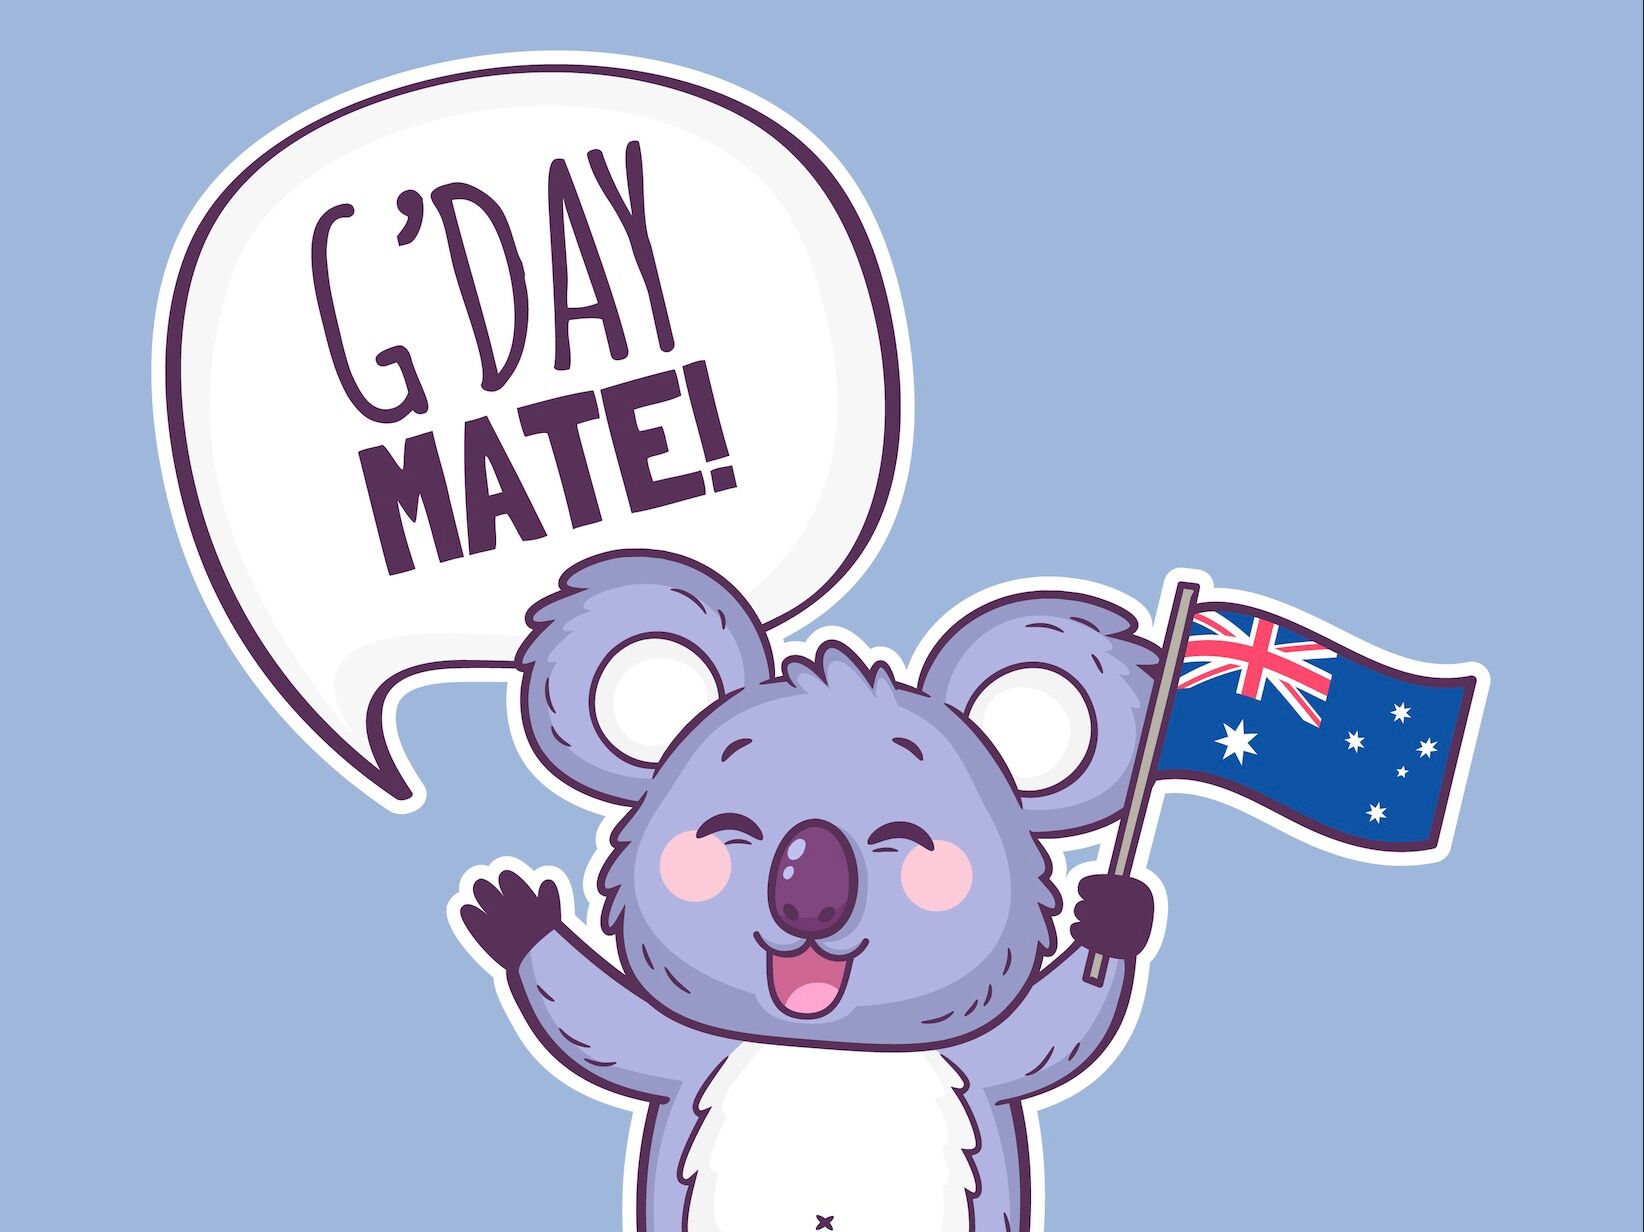 Cute koala character holding an Australian flag and saying G'day mate! Cute cartoon sticker with koala bear. Australia day vector illustration.